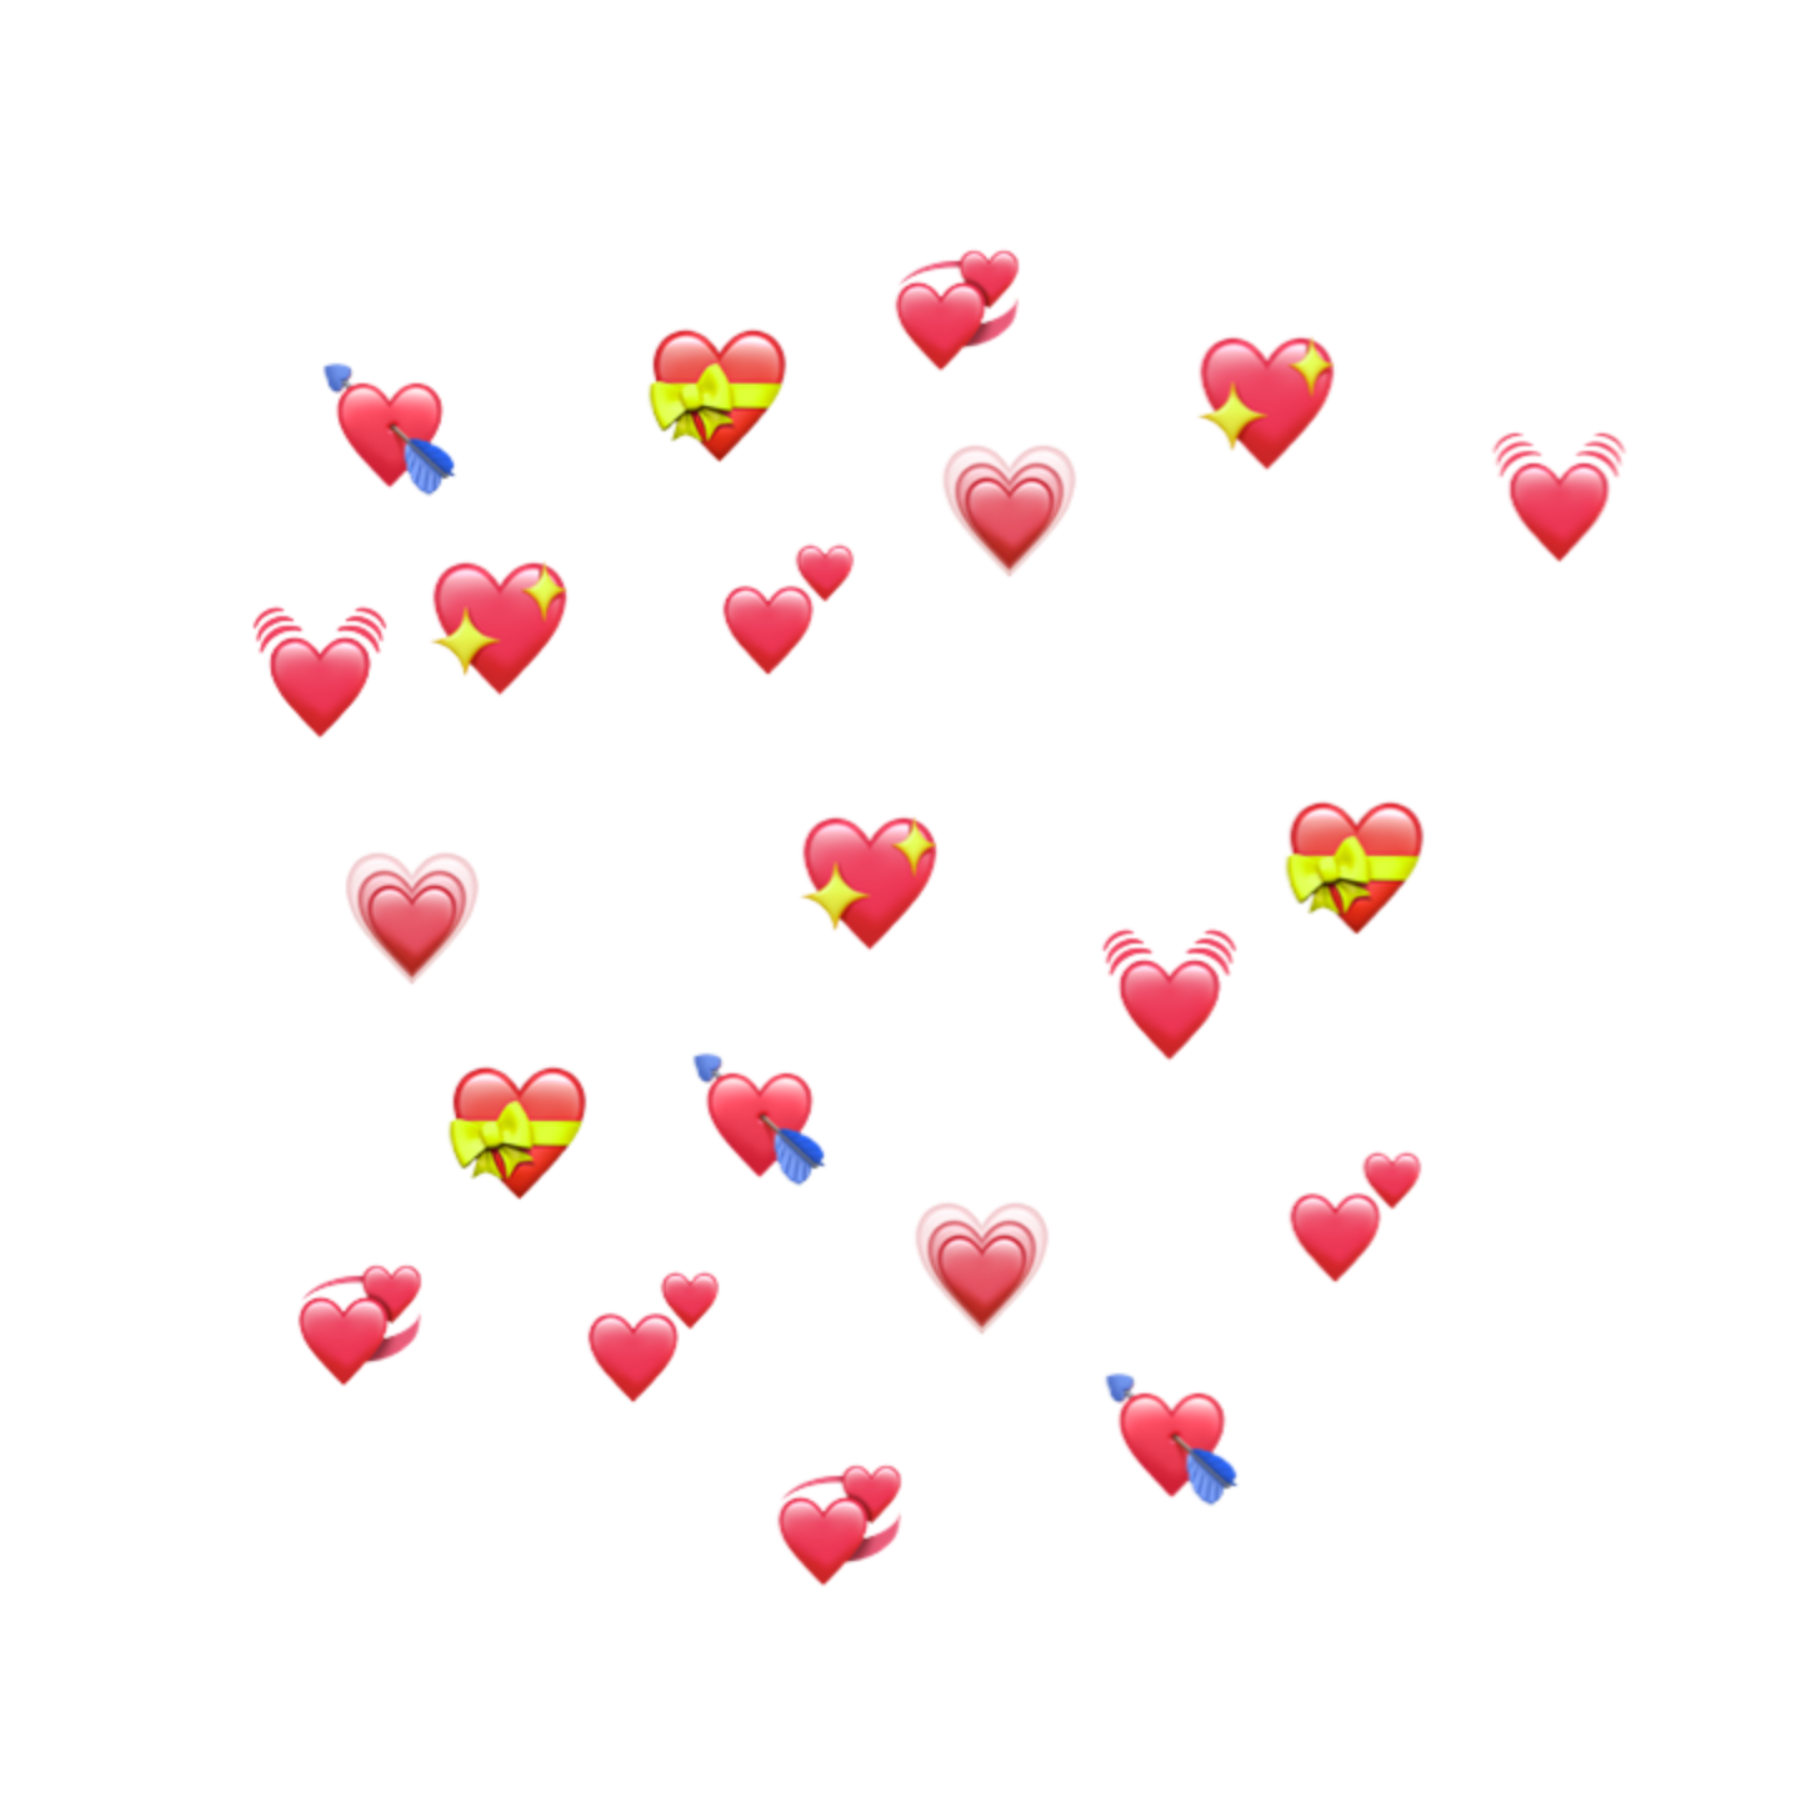 uwu hearts emoji reactmemes memes meme heart lmao bts... - Heart Emoji Meme